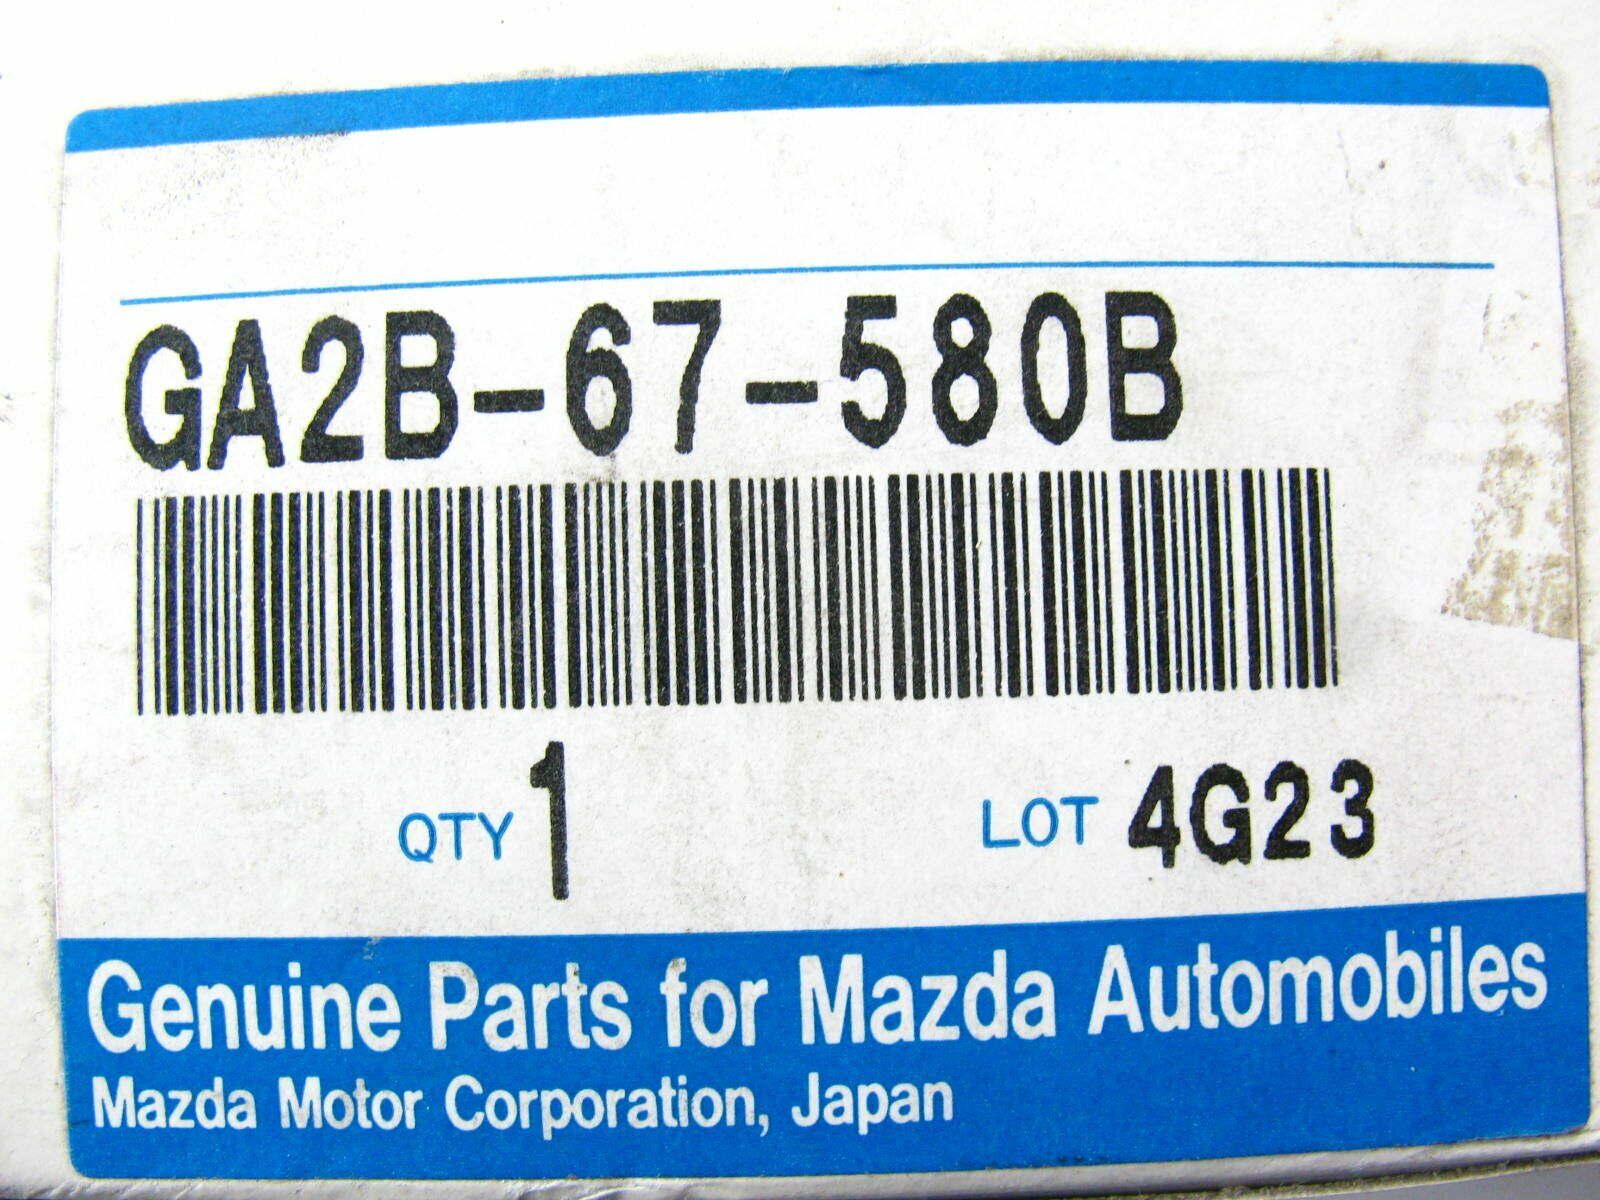 NEW - OEM BCM Body Control Module Unit For 1994-97 Mazda 626 MX-6 GA2B67580B